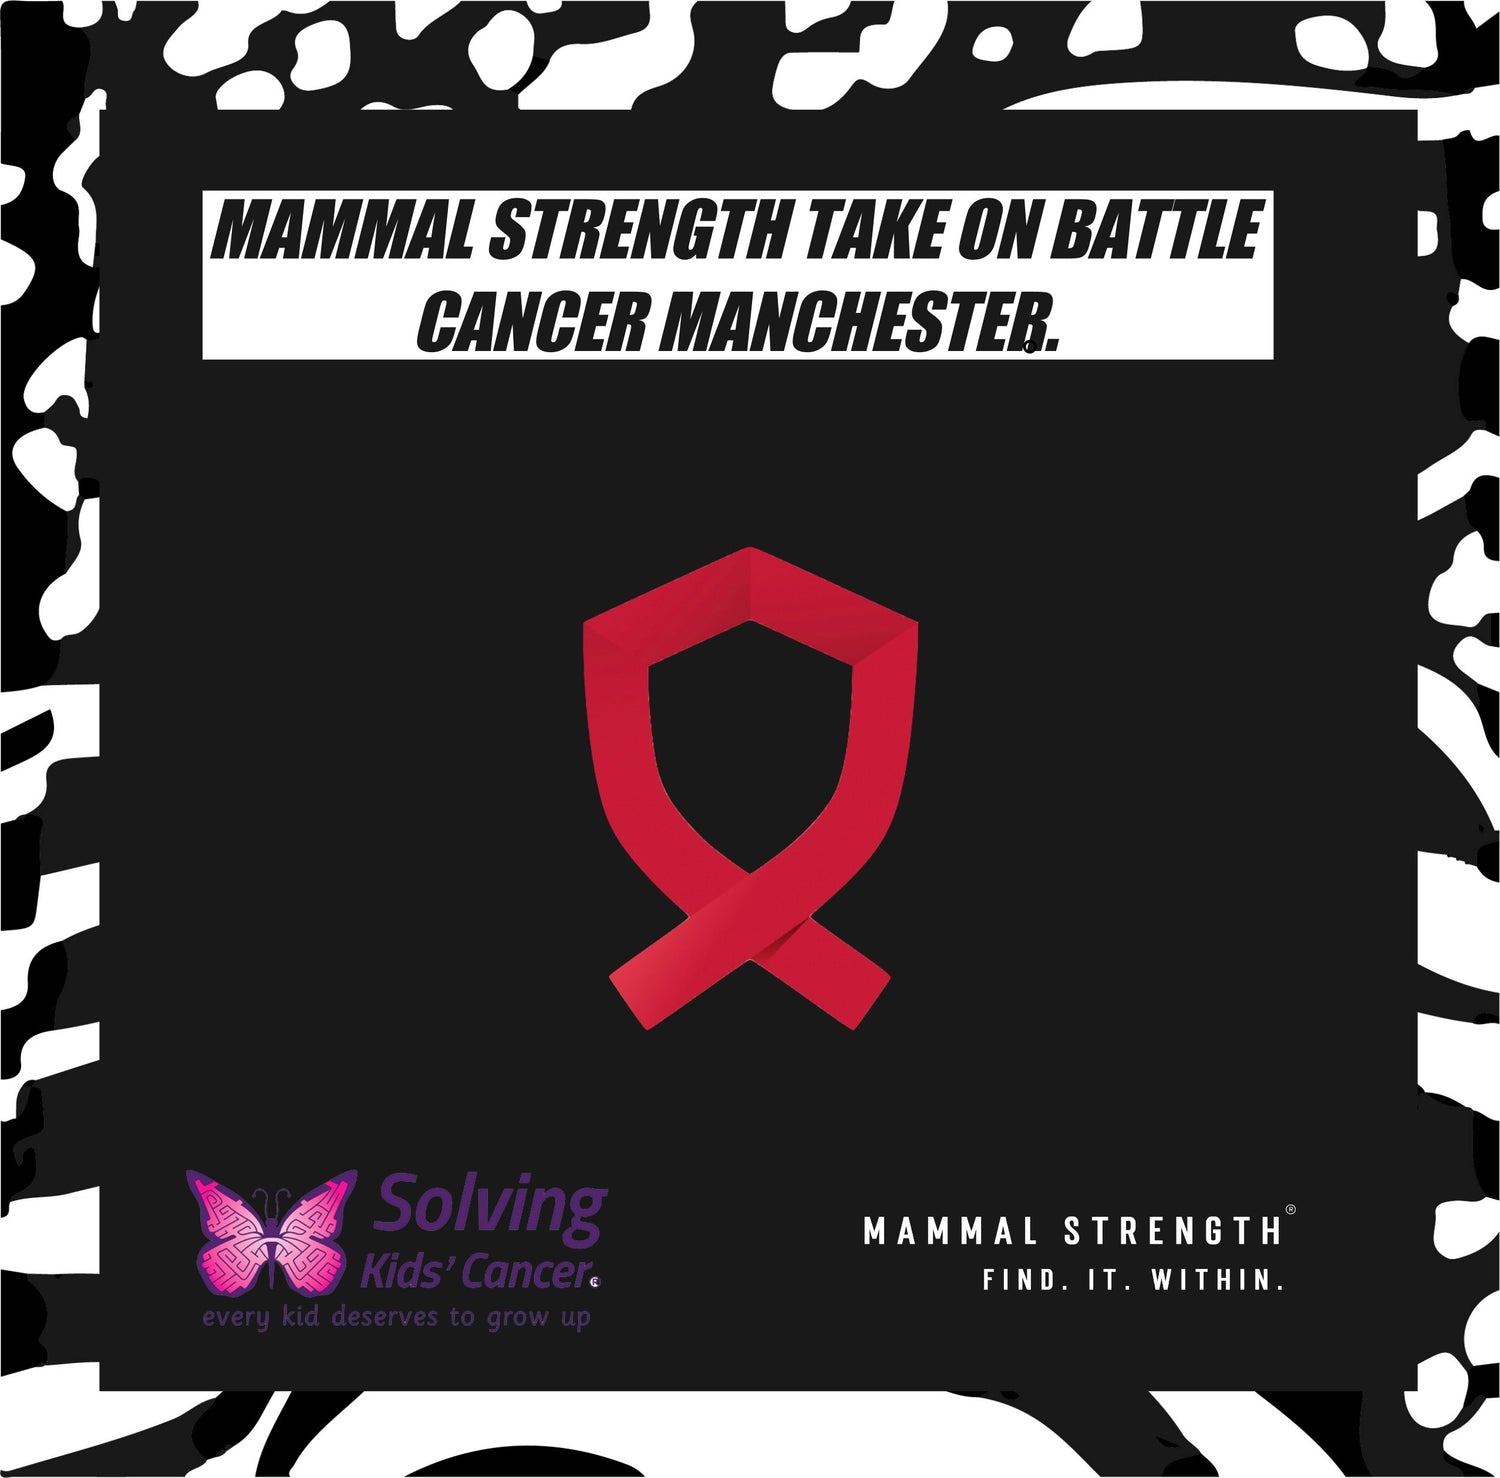 MAMMAL STRENGTH TAKE ON BATTLE CANCER MANCHESTER. - Mammal Strength